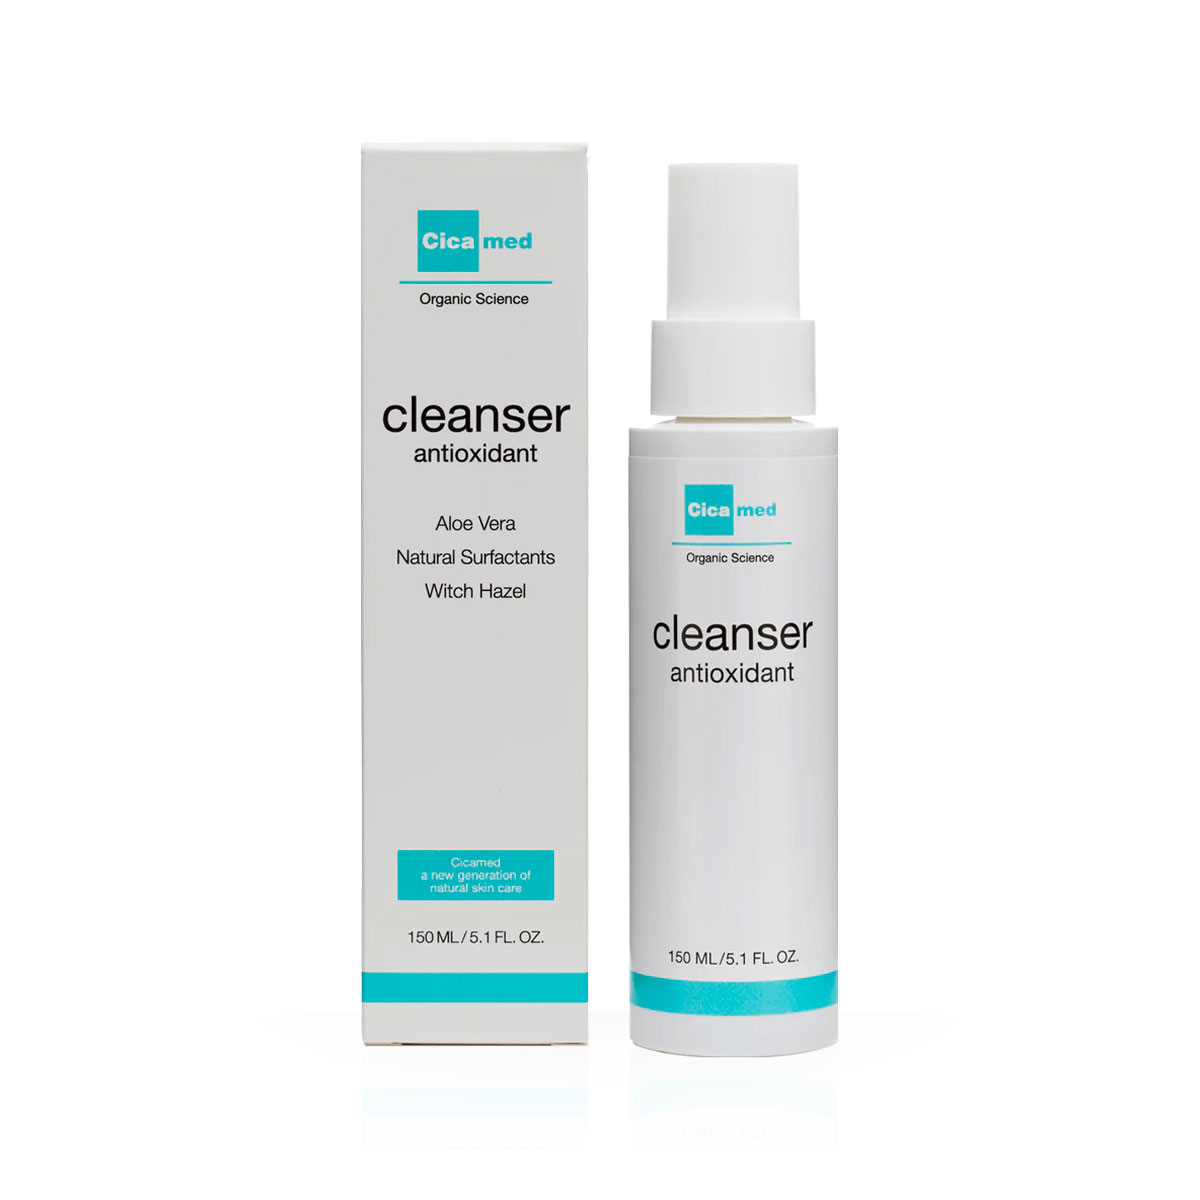 Cicamed Cleanser Antioxidant 150ml